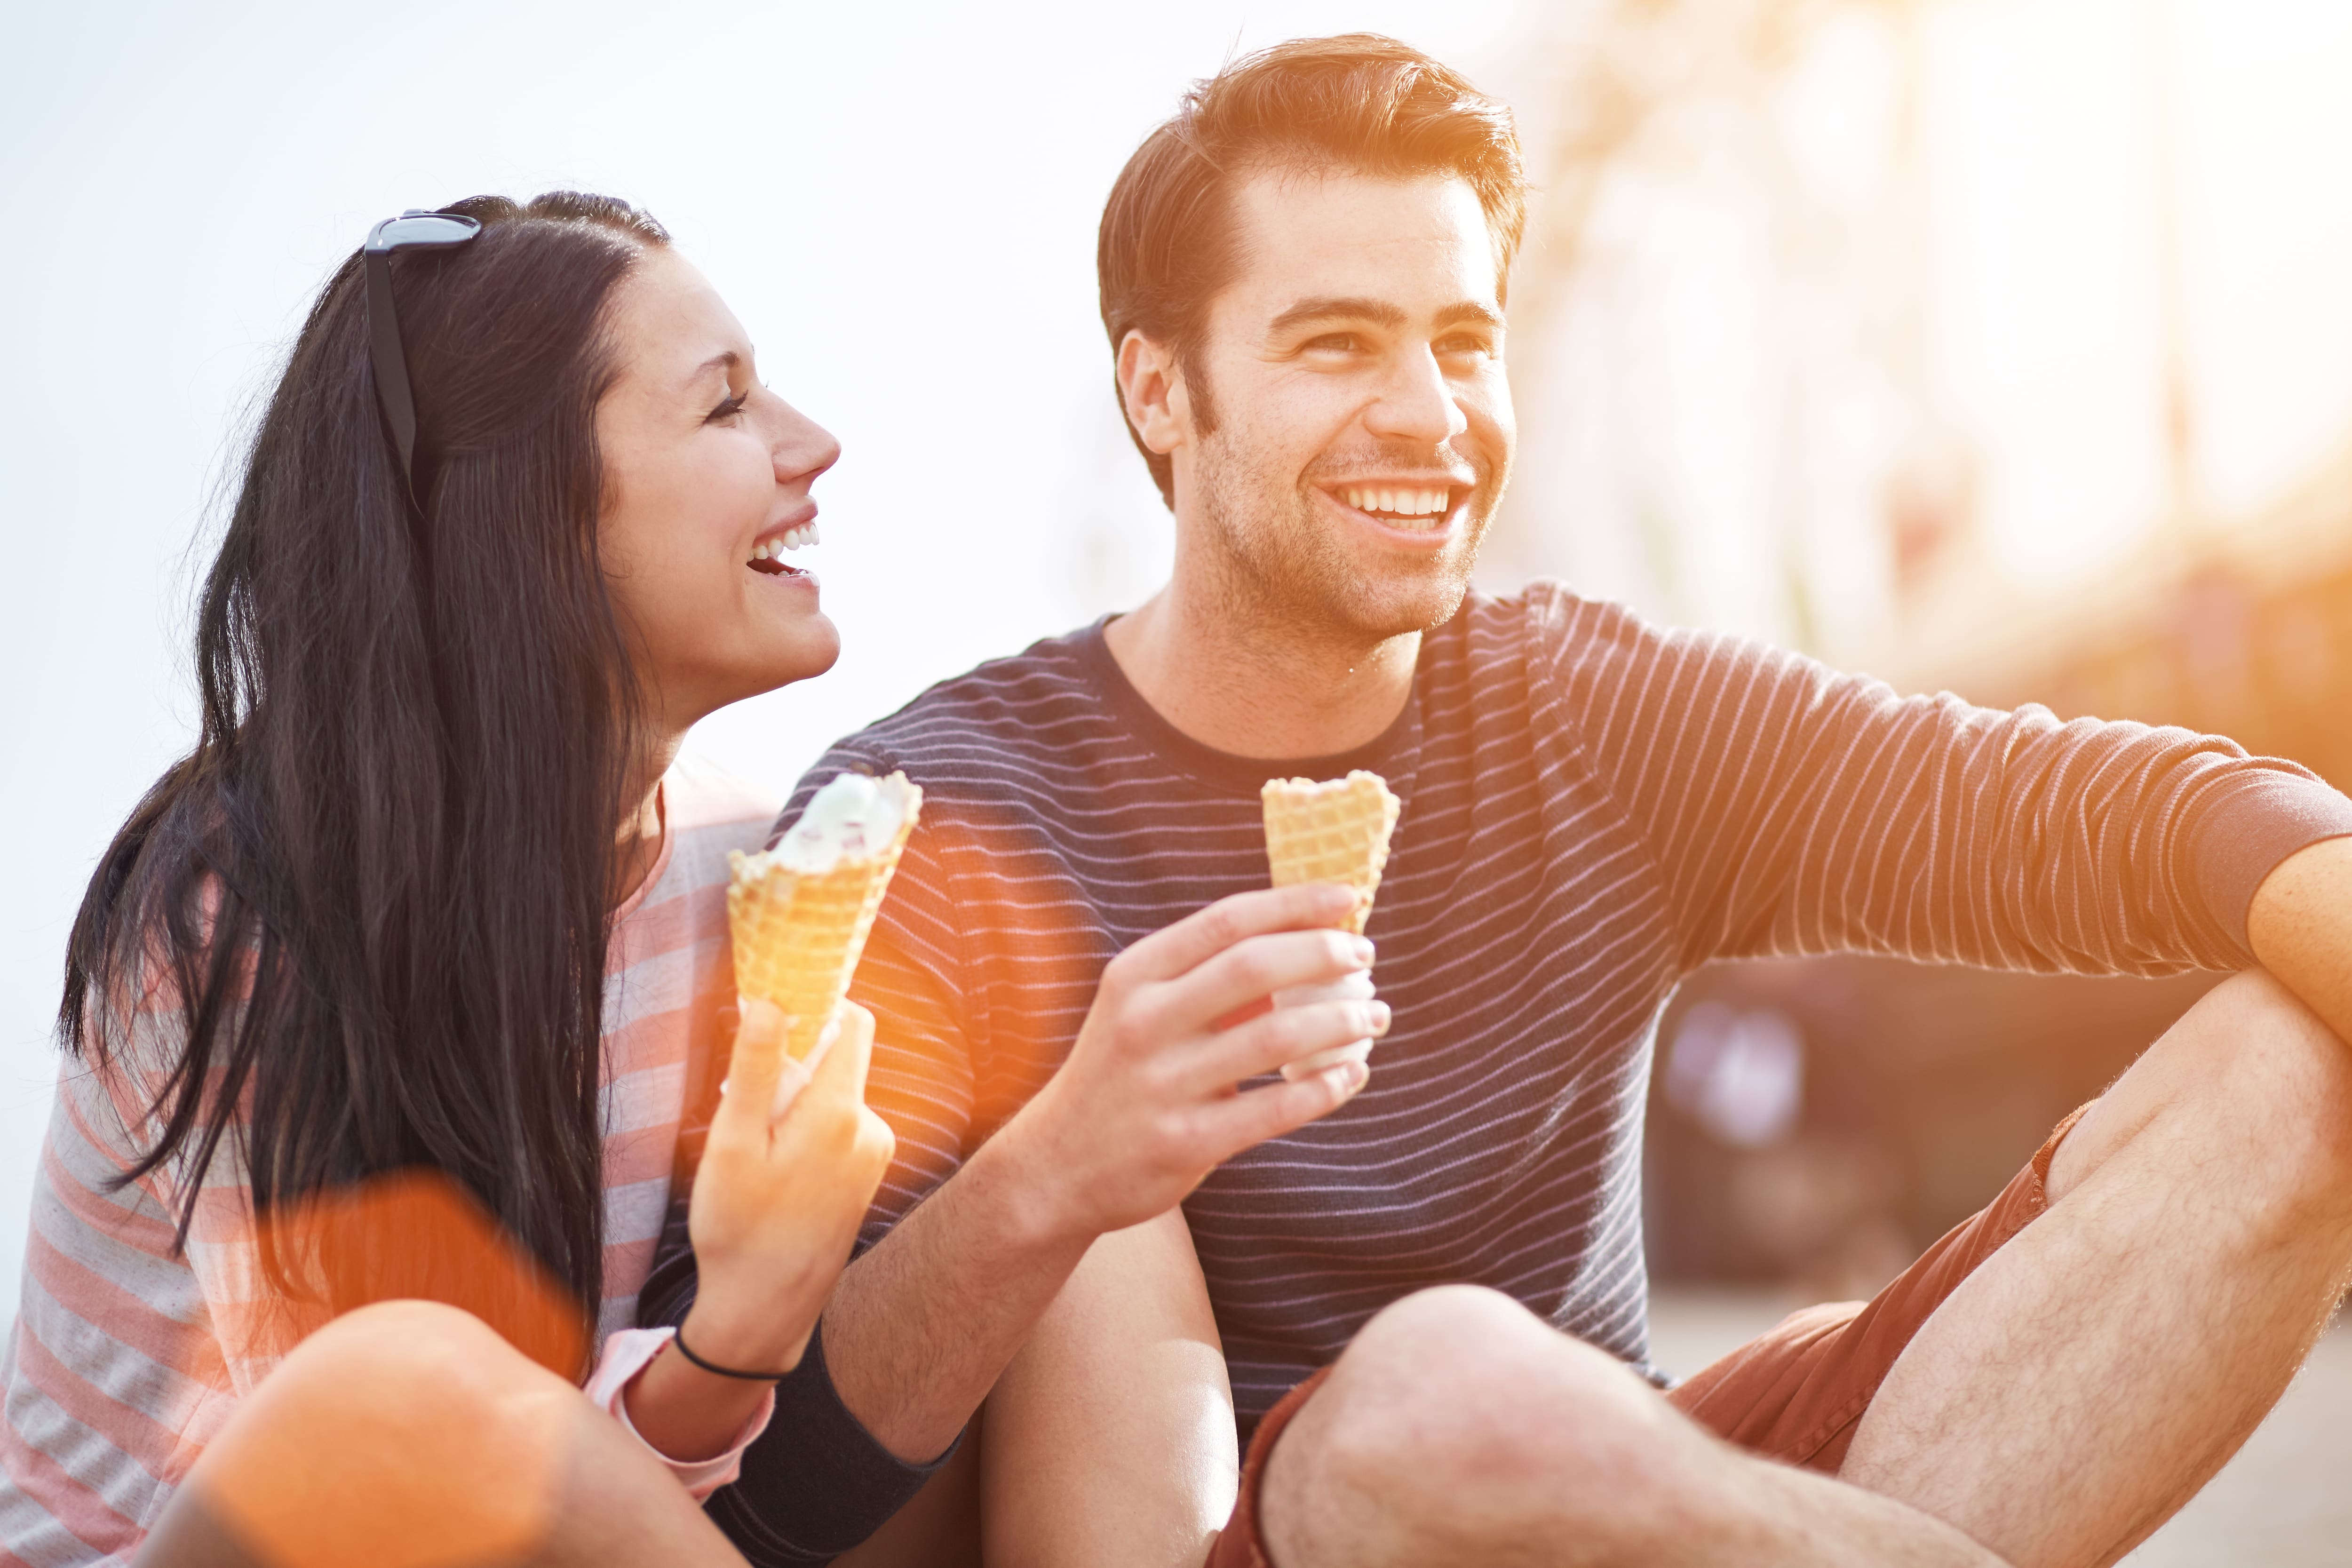 Romantic couple eating ice cream at park